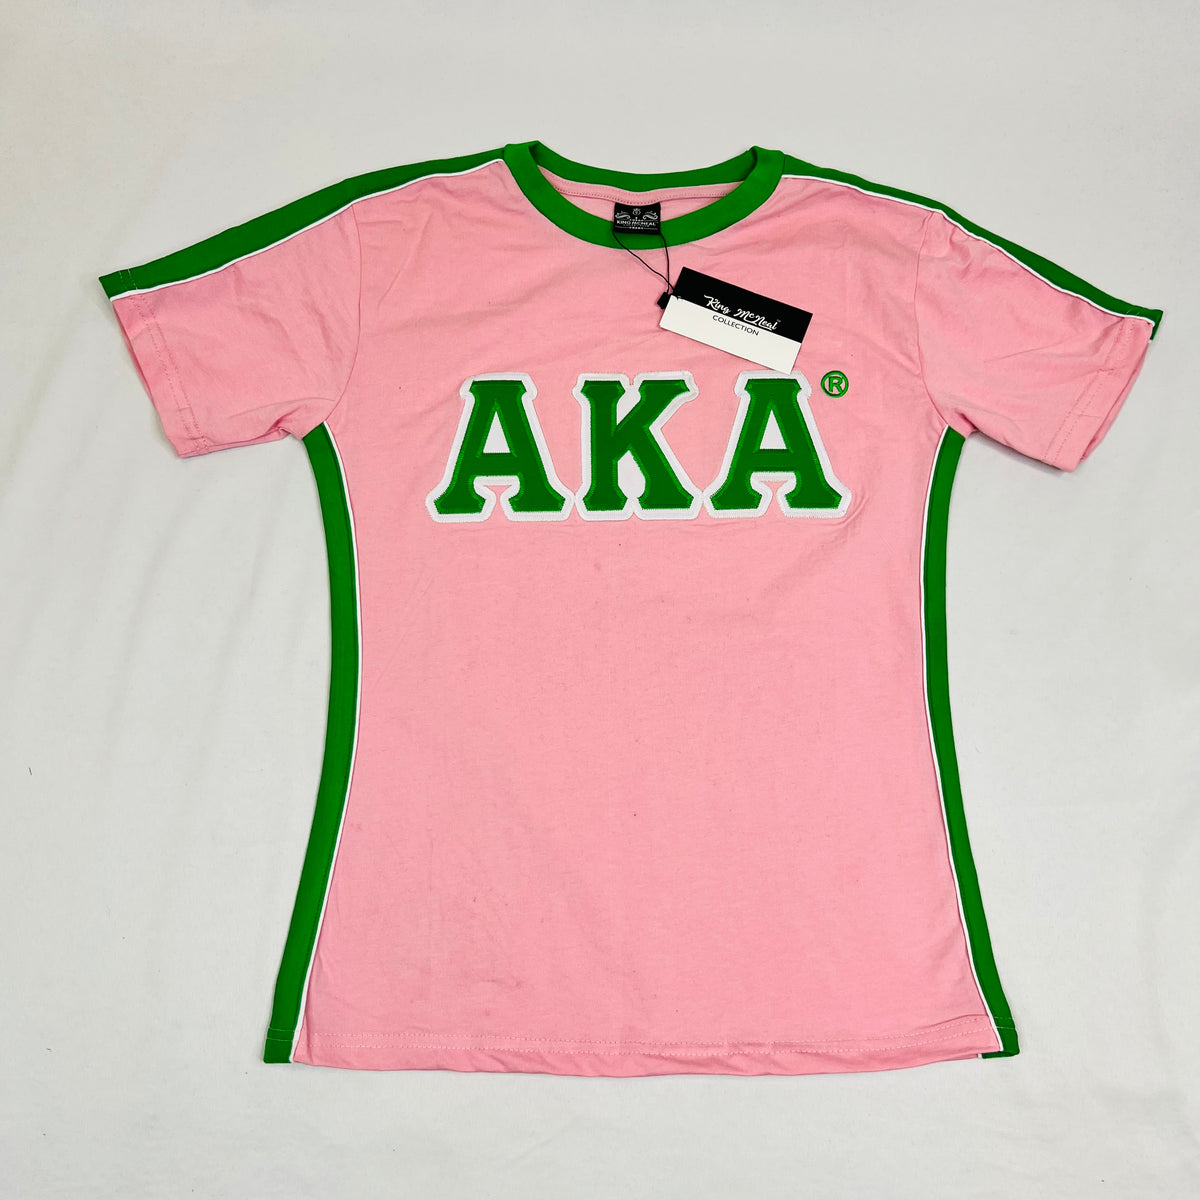 AKA Premium Shirt – The King McNeal Collection